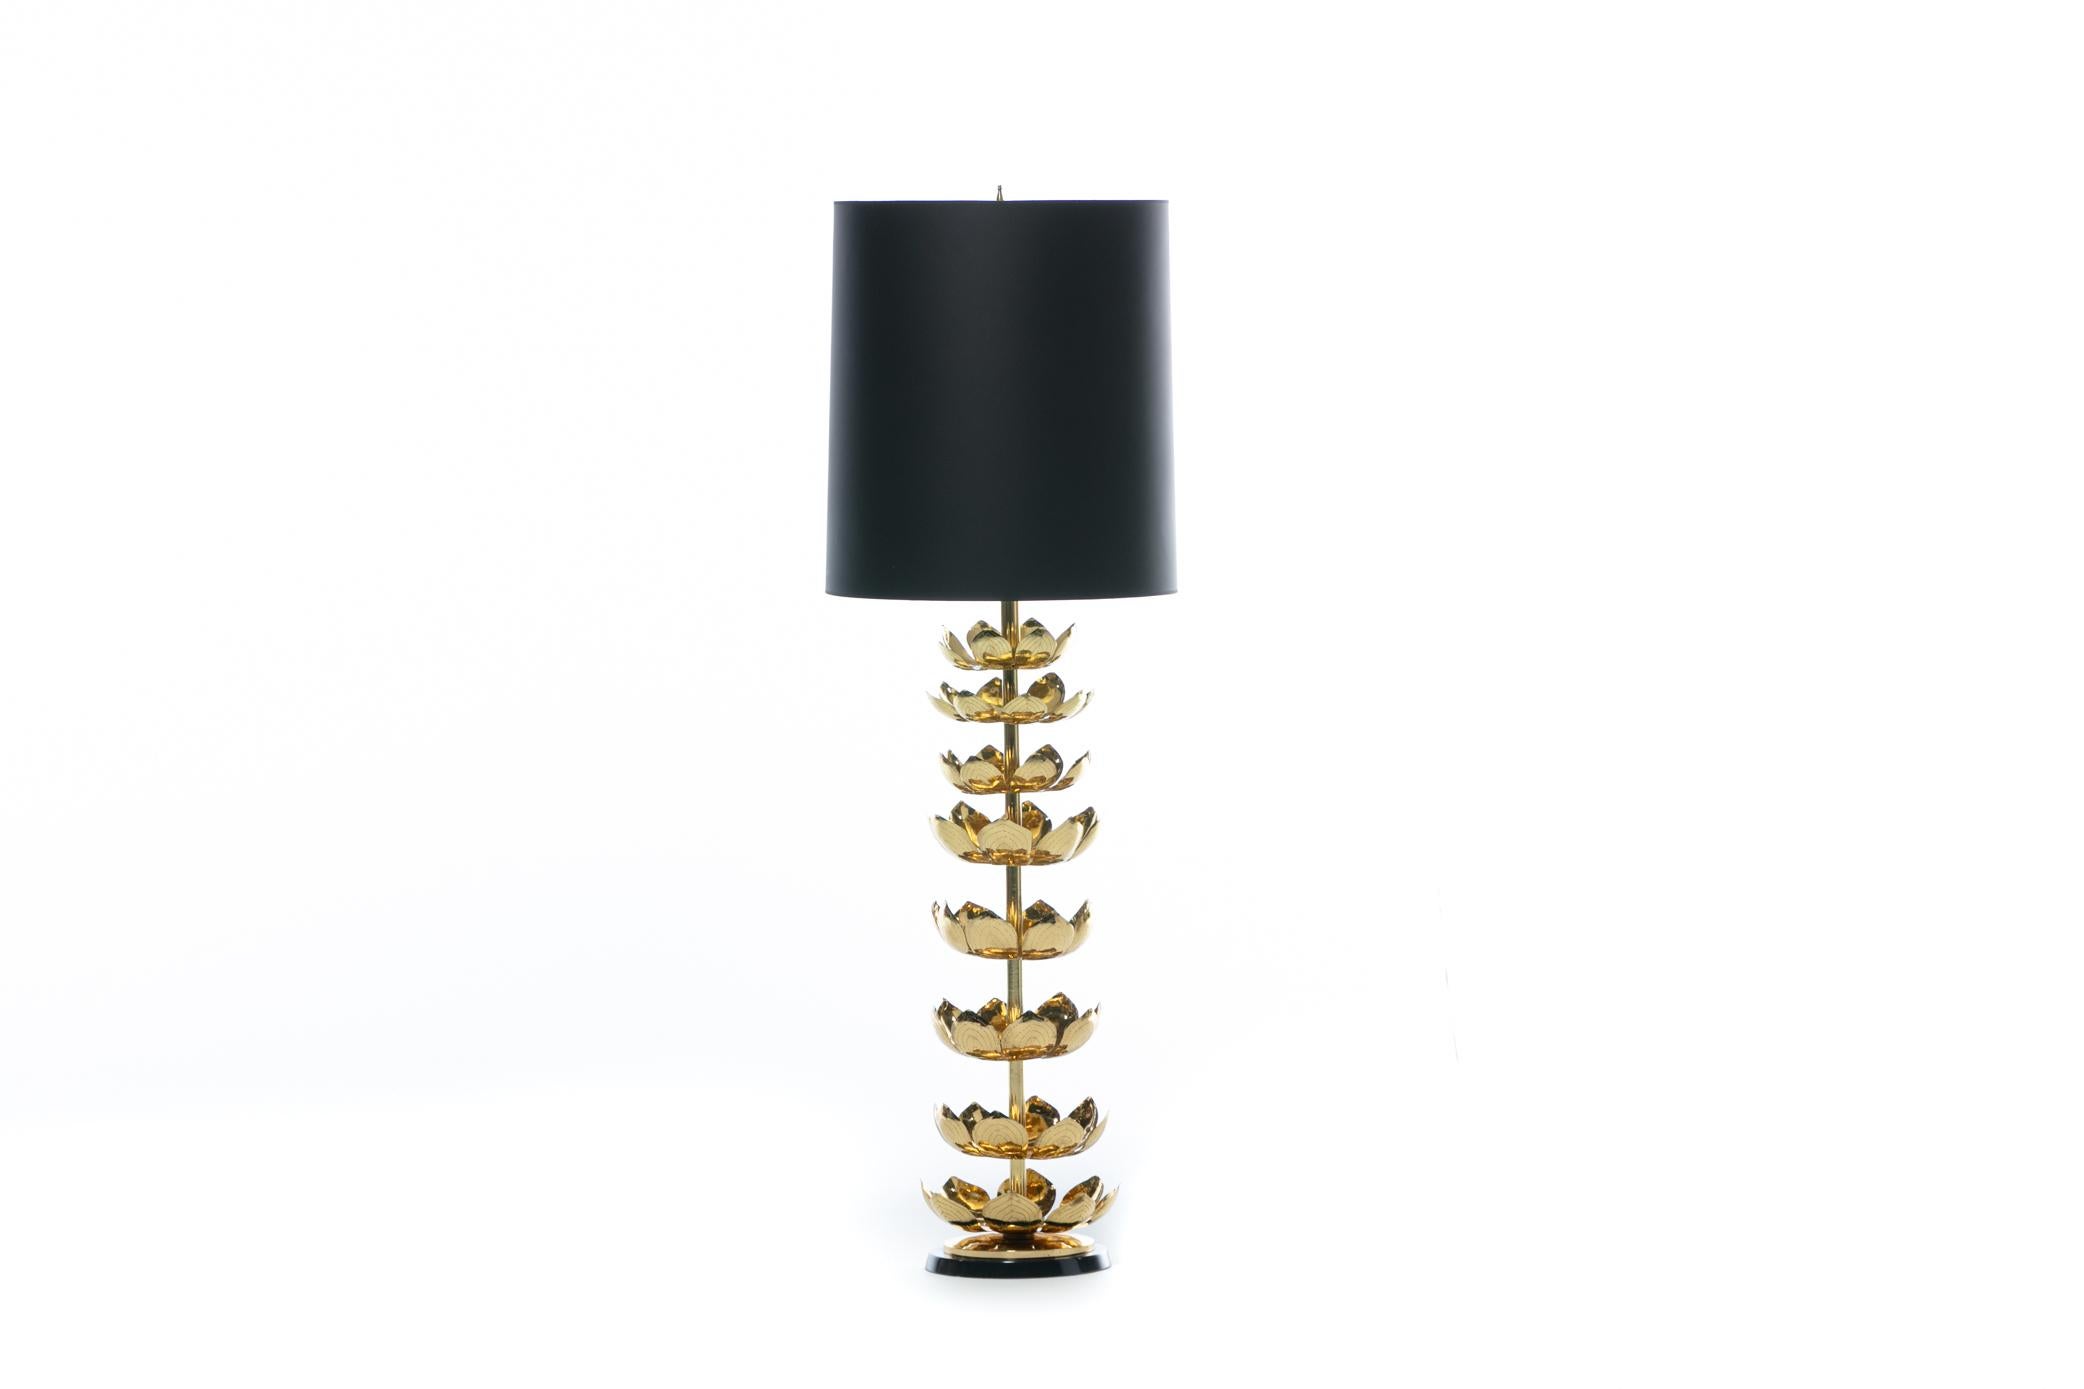 Hong Kong Tall Brass Feldman Lighting Lamp with Lotus Flower Layered Detail c. 1955 For Sale